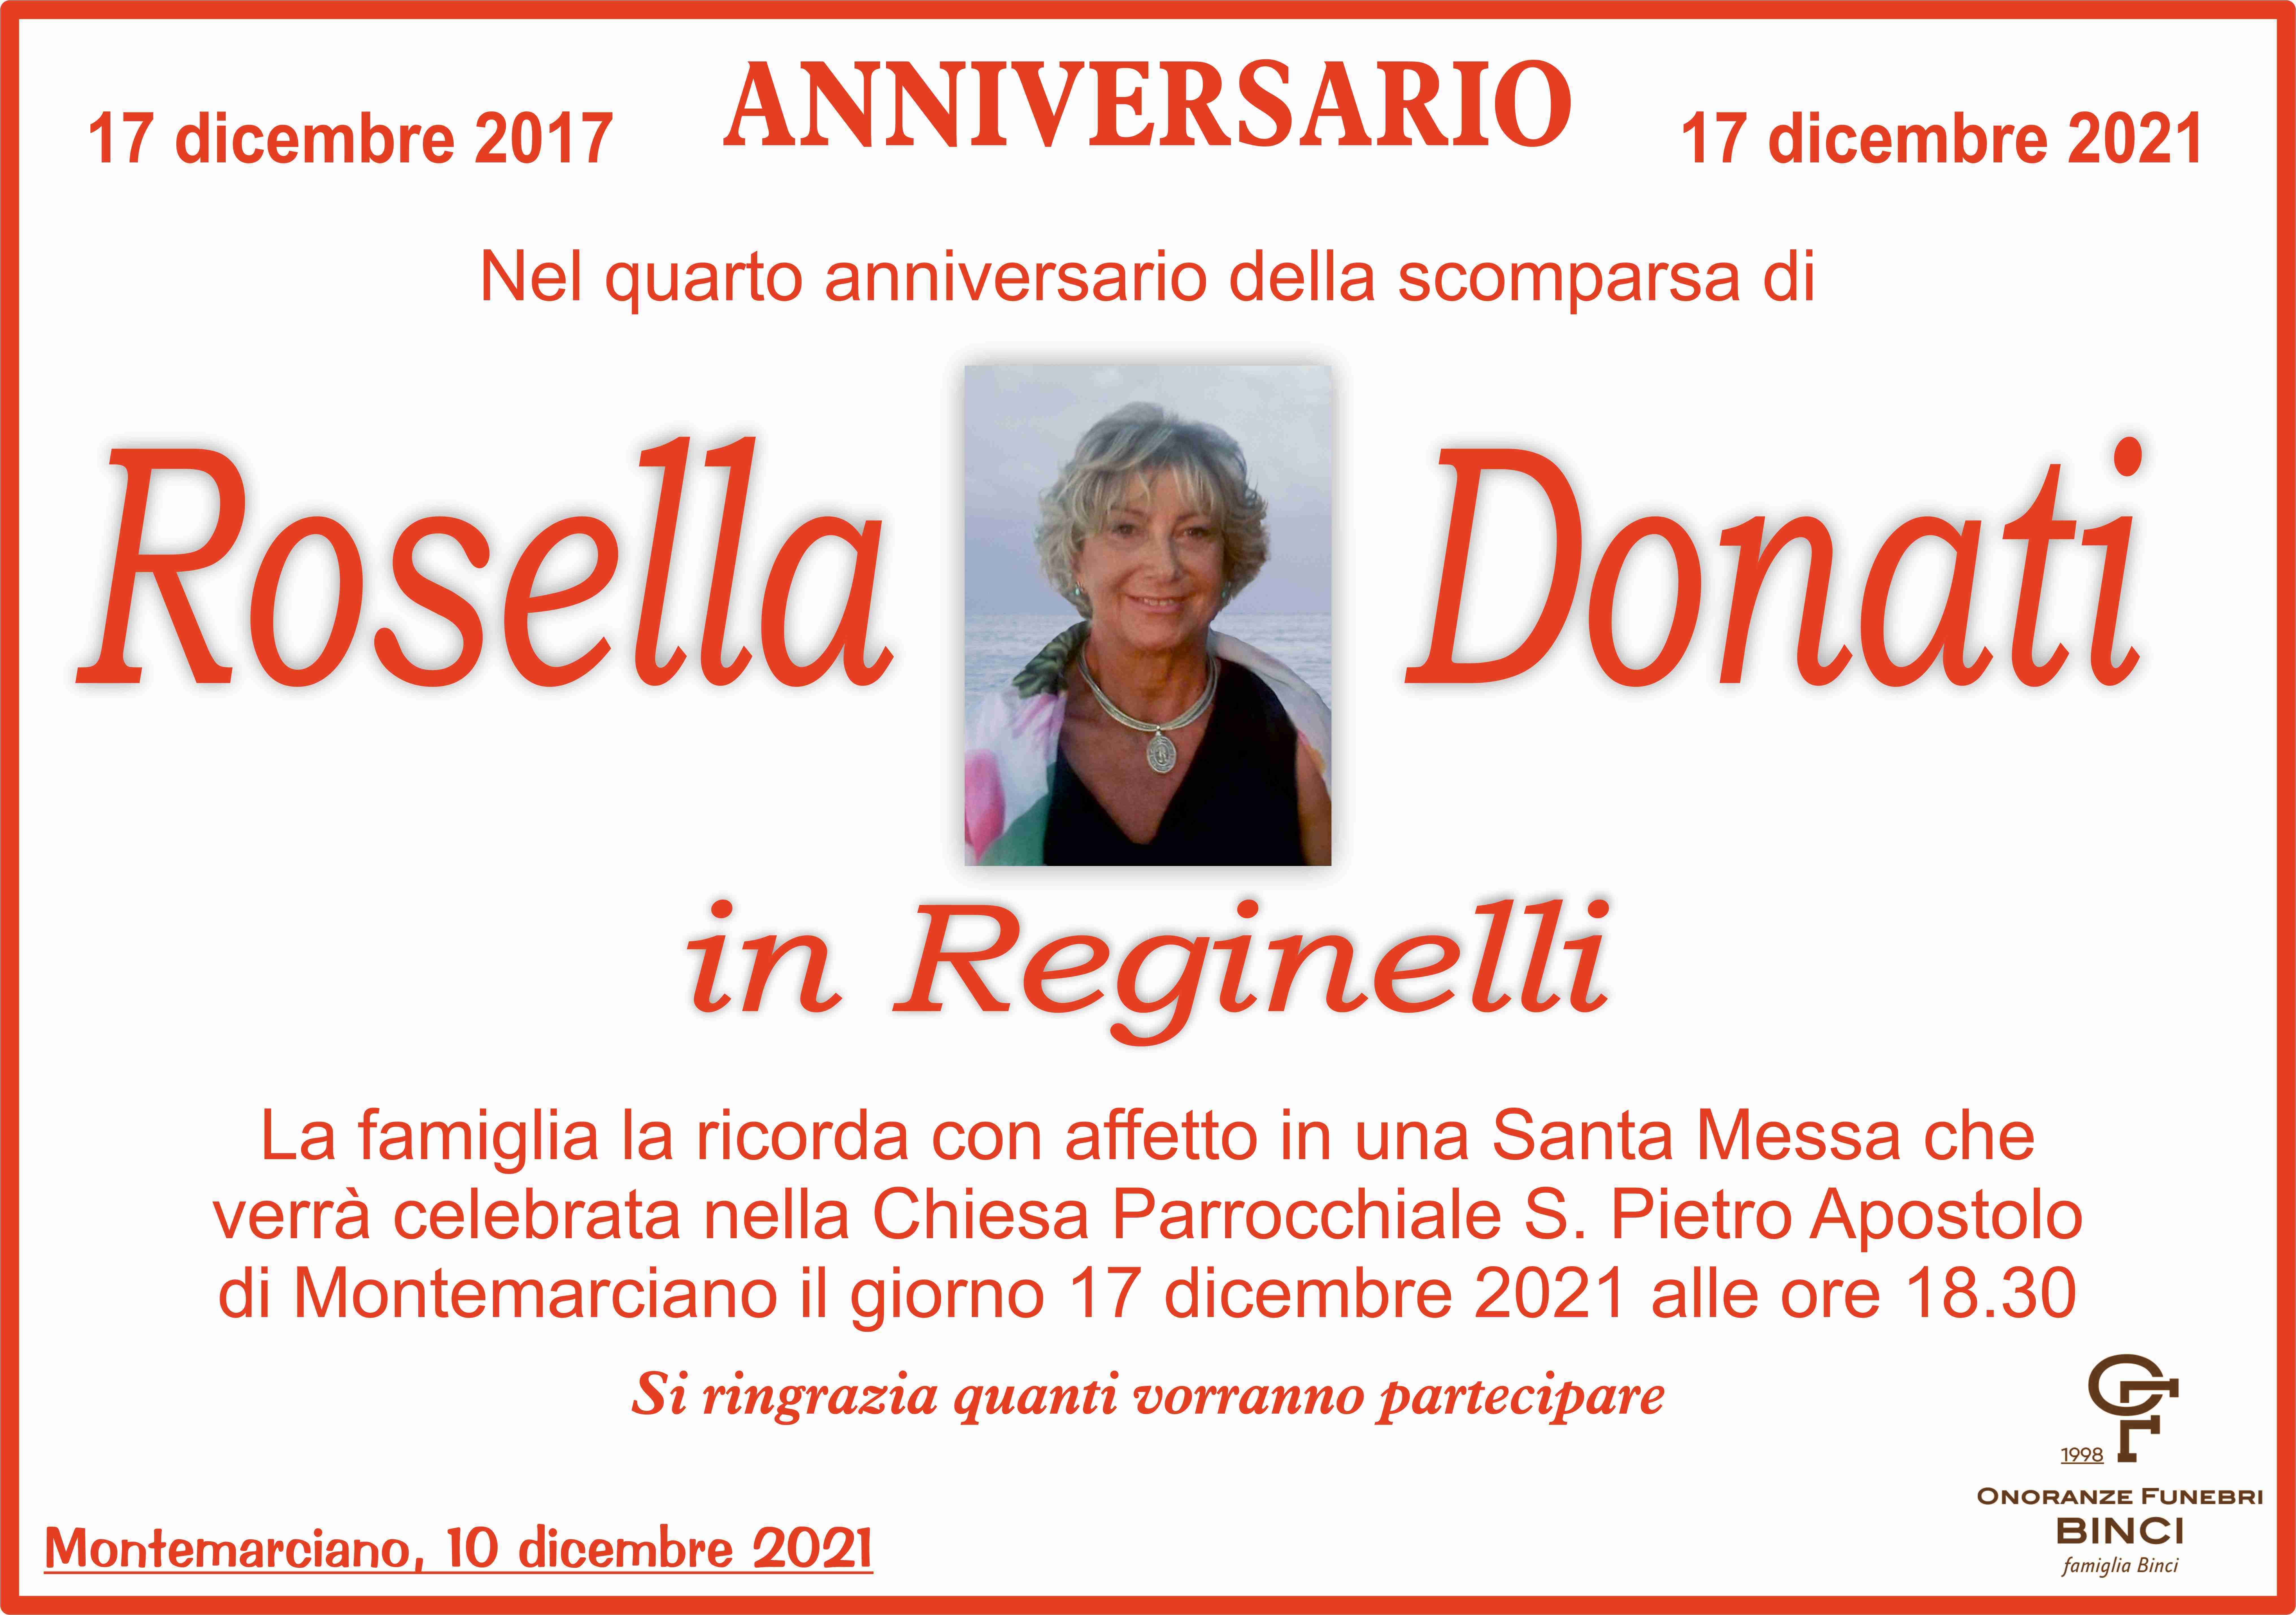 Rosella Donati